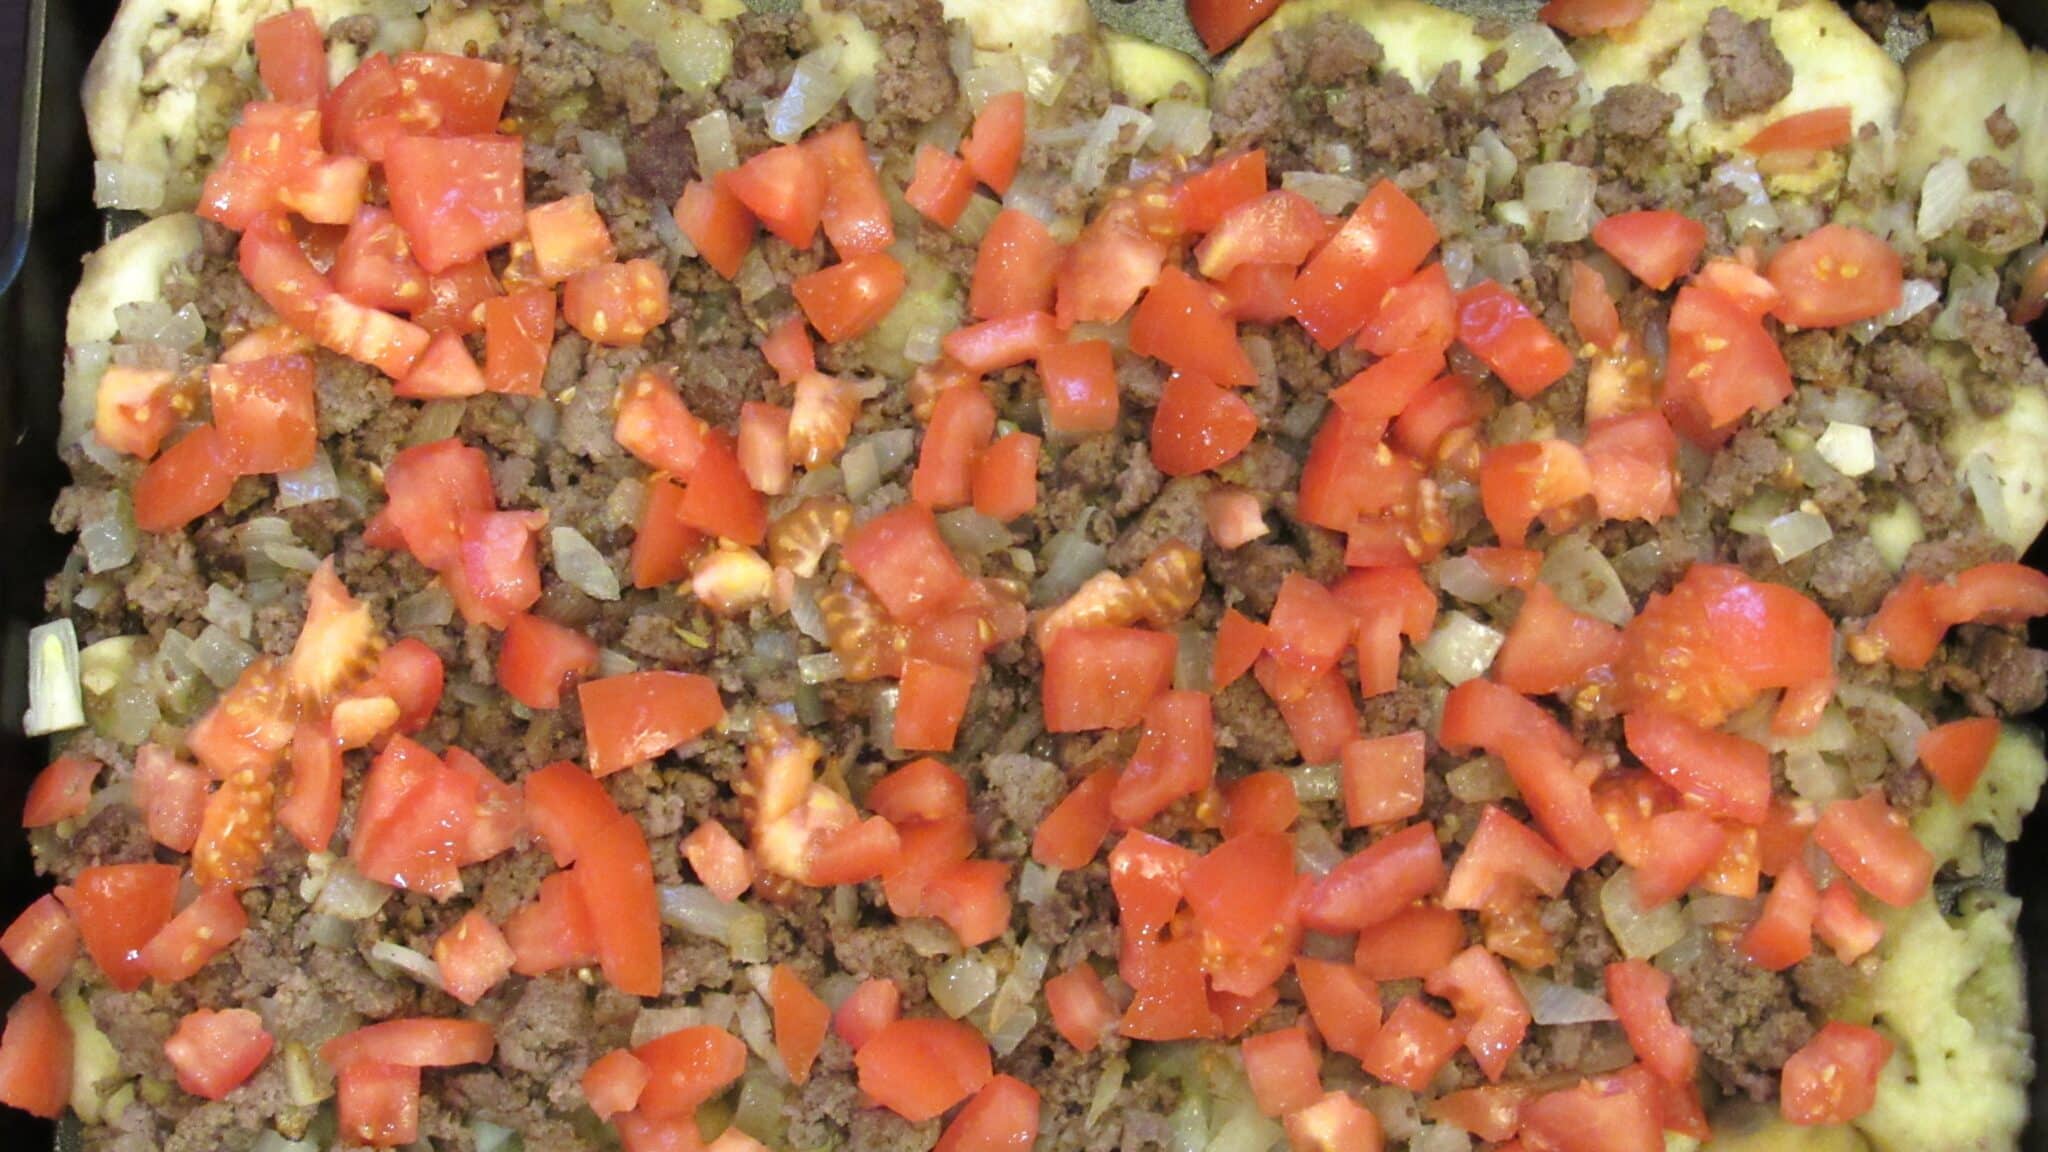 Ground beef eggplant pizza casserole assembling process.